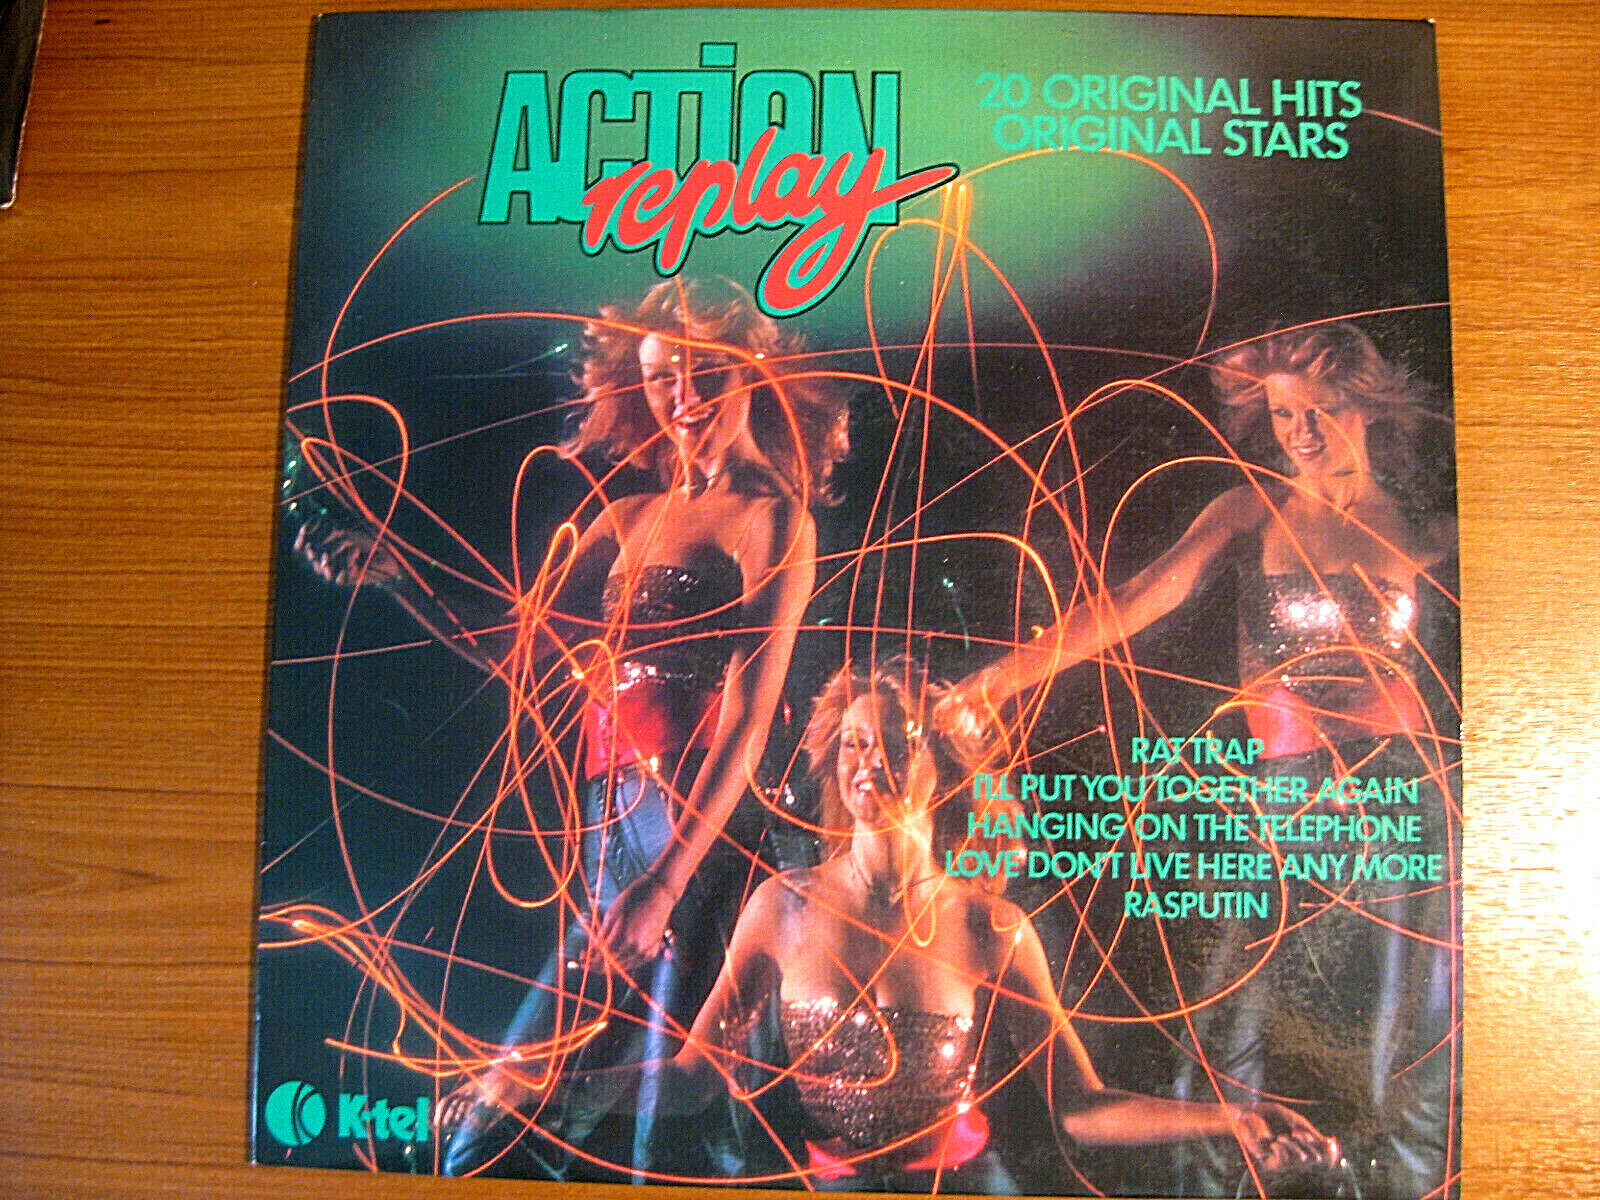 Original Stars - Action Replay, 20 Original Hits, Vinyl LP, 1st Press Very Good+